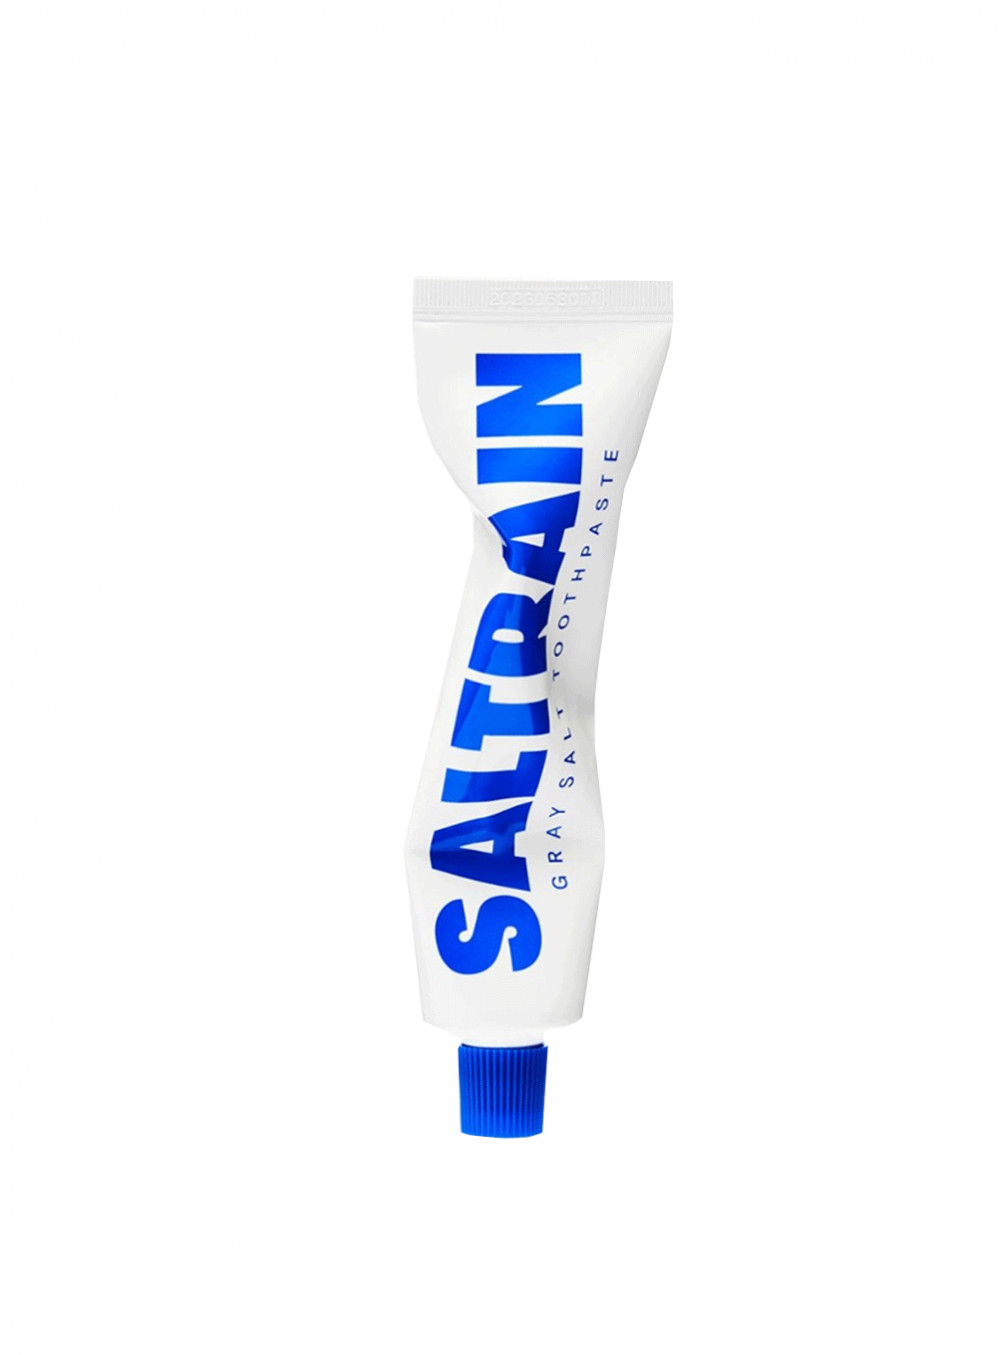 SALTRAIN Clean Breath prémium fluoridmentes fogkrém koreai szürke sóval 100g